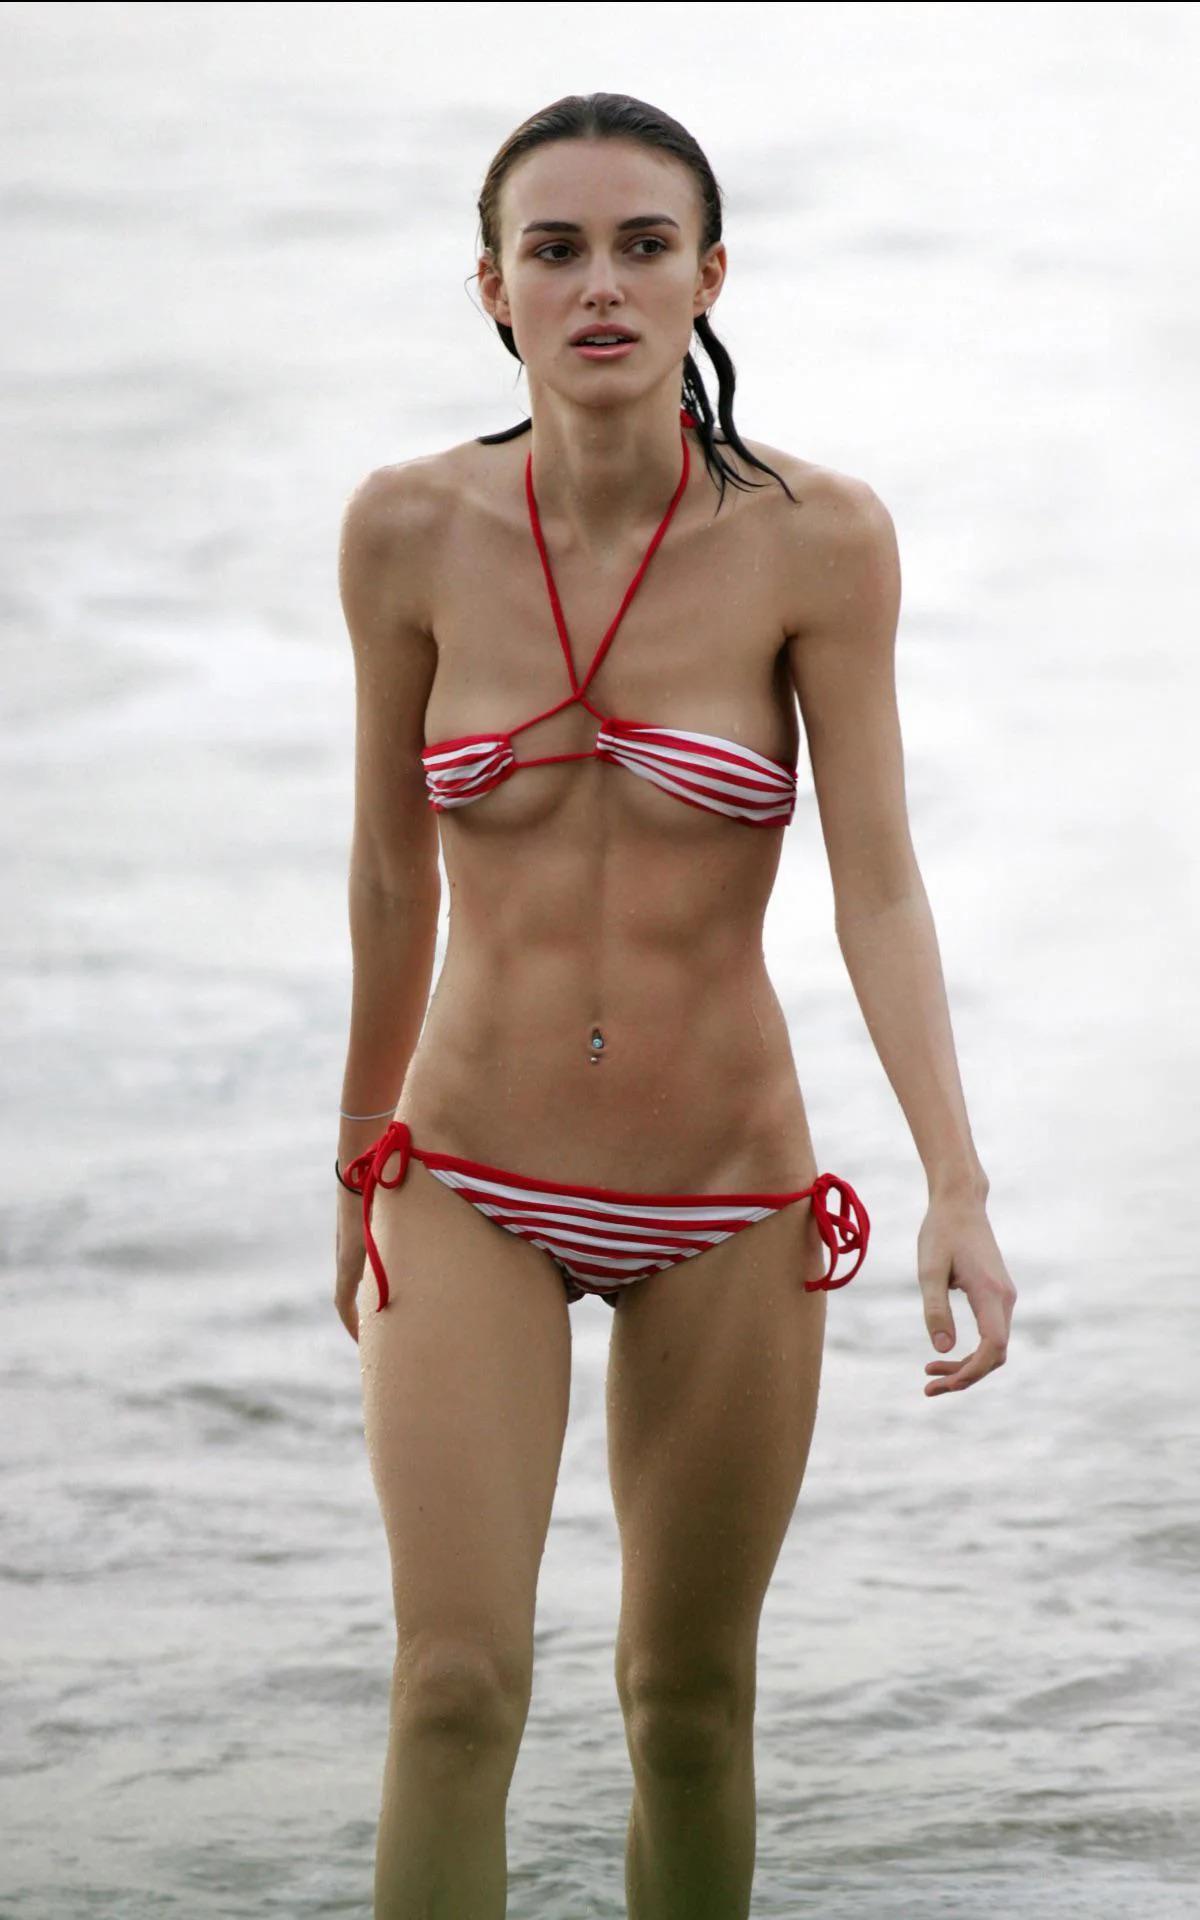 Keira Knightley Had An Amazing Bikini Body